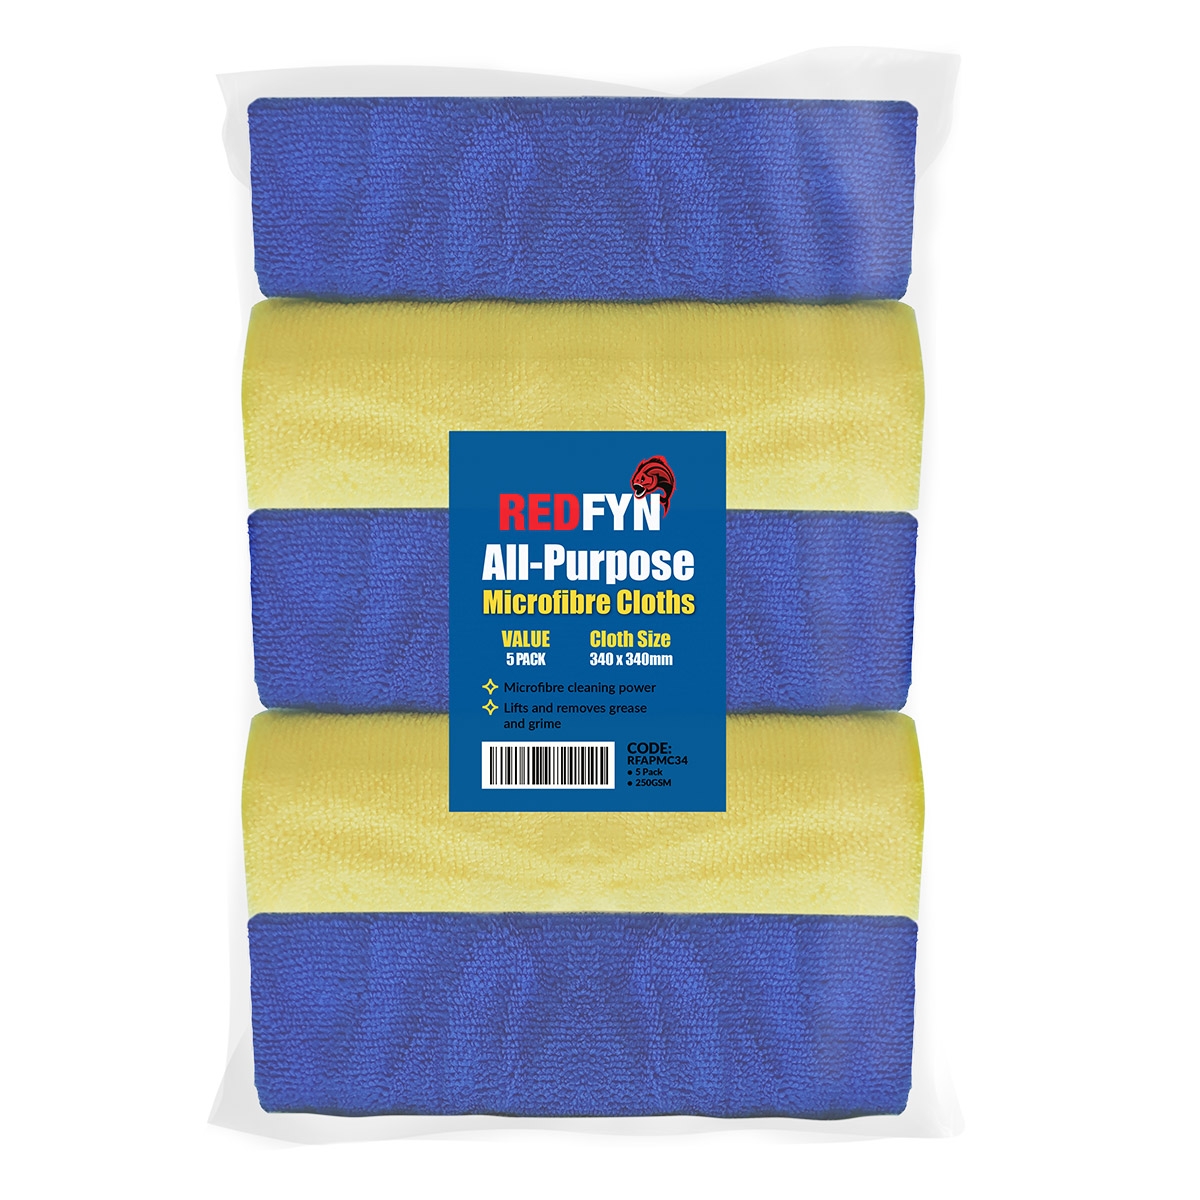 Redfyn All-Purpose Microfibre Cloths (5 Pack)